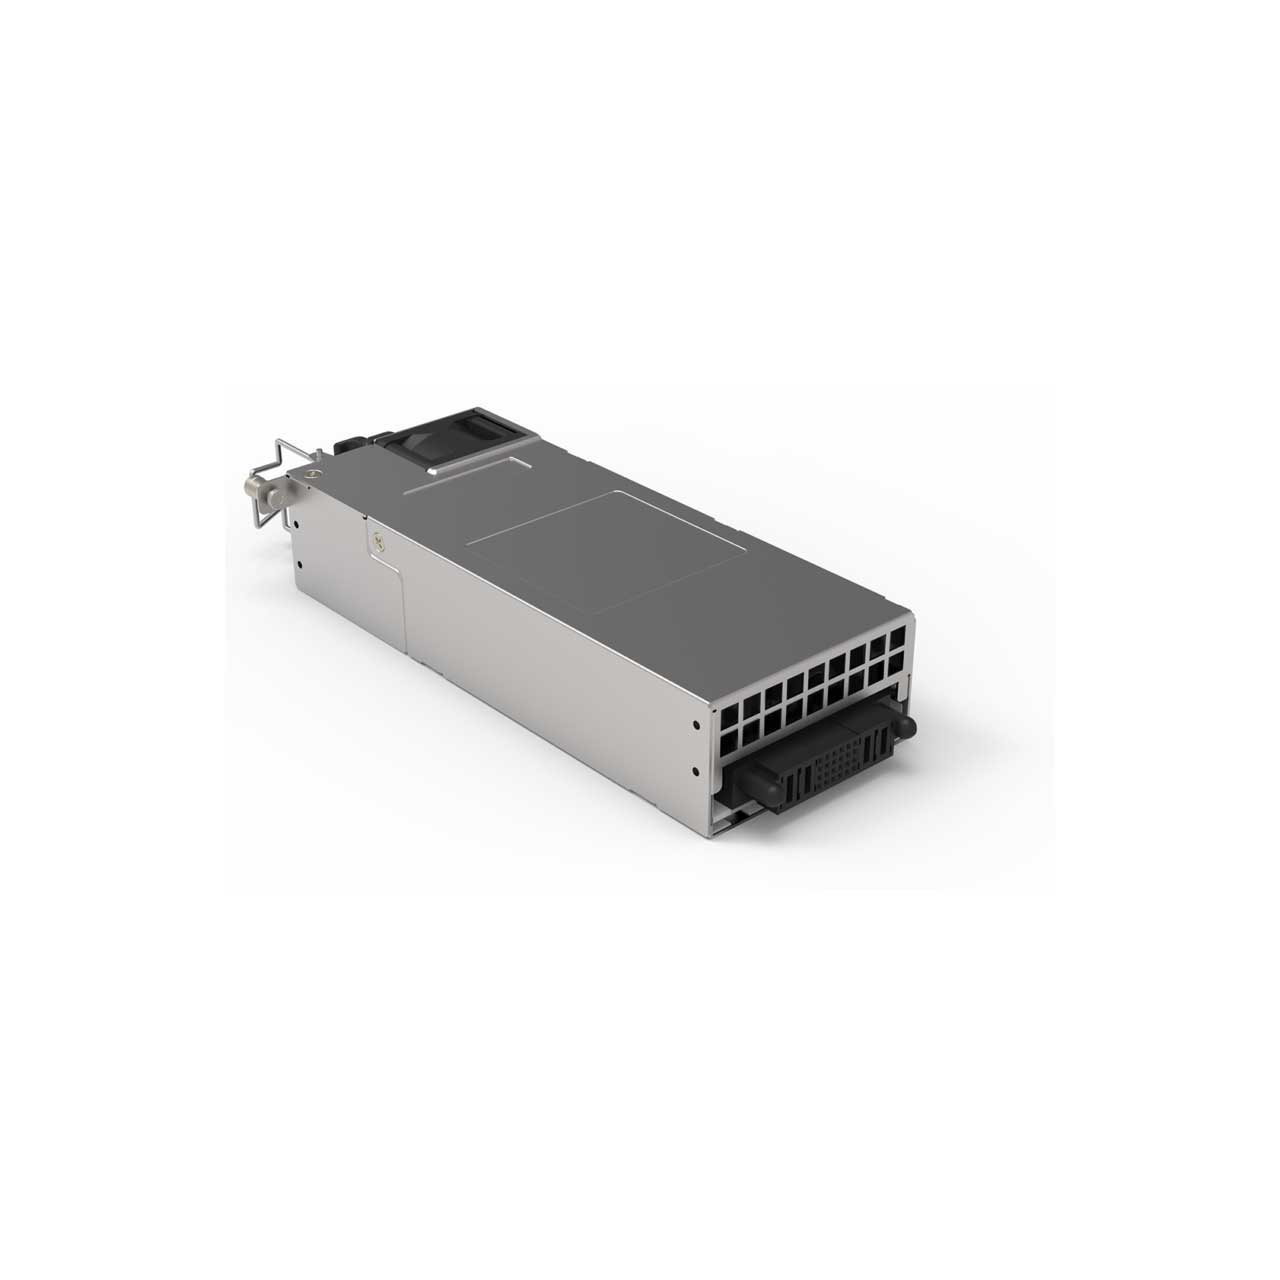 Luminex GigaCore 30i 10Gb Ethernet AV Network Switch with 24x RJ45/6x SFP+  Cages/PoE++ & 500Watt PSU